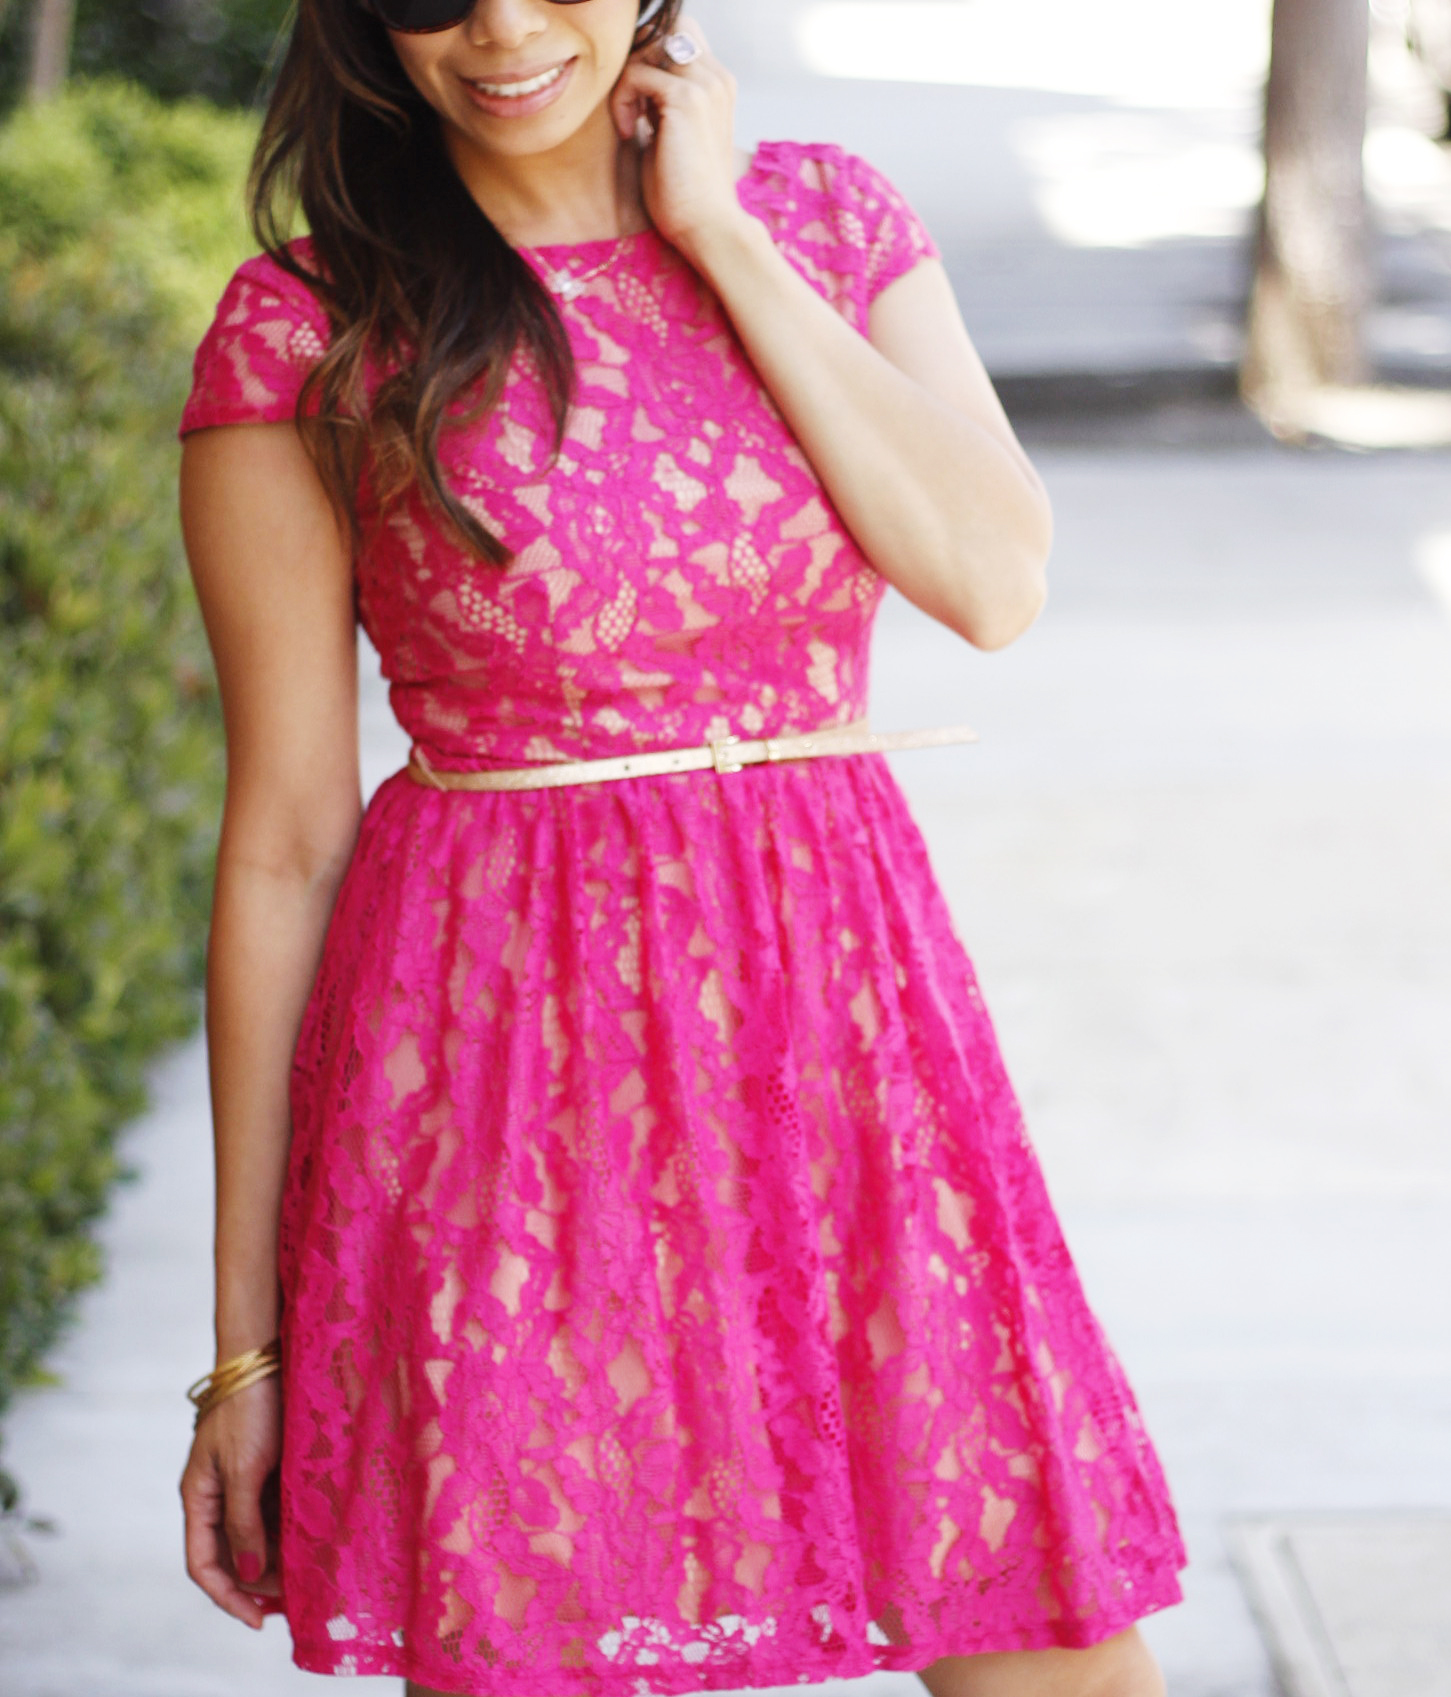 Hot Pink Lace Dress - Lesley Kim- A Lifestyle Blog by Lesley Kim